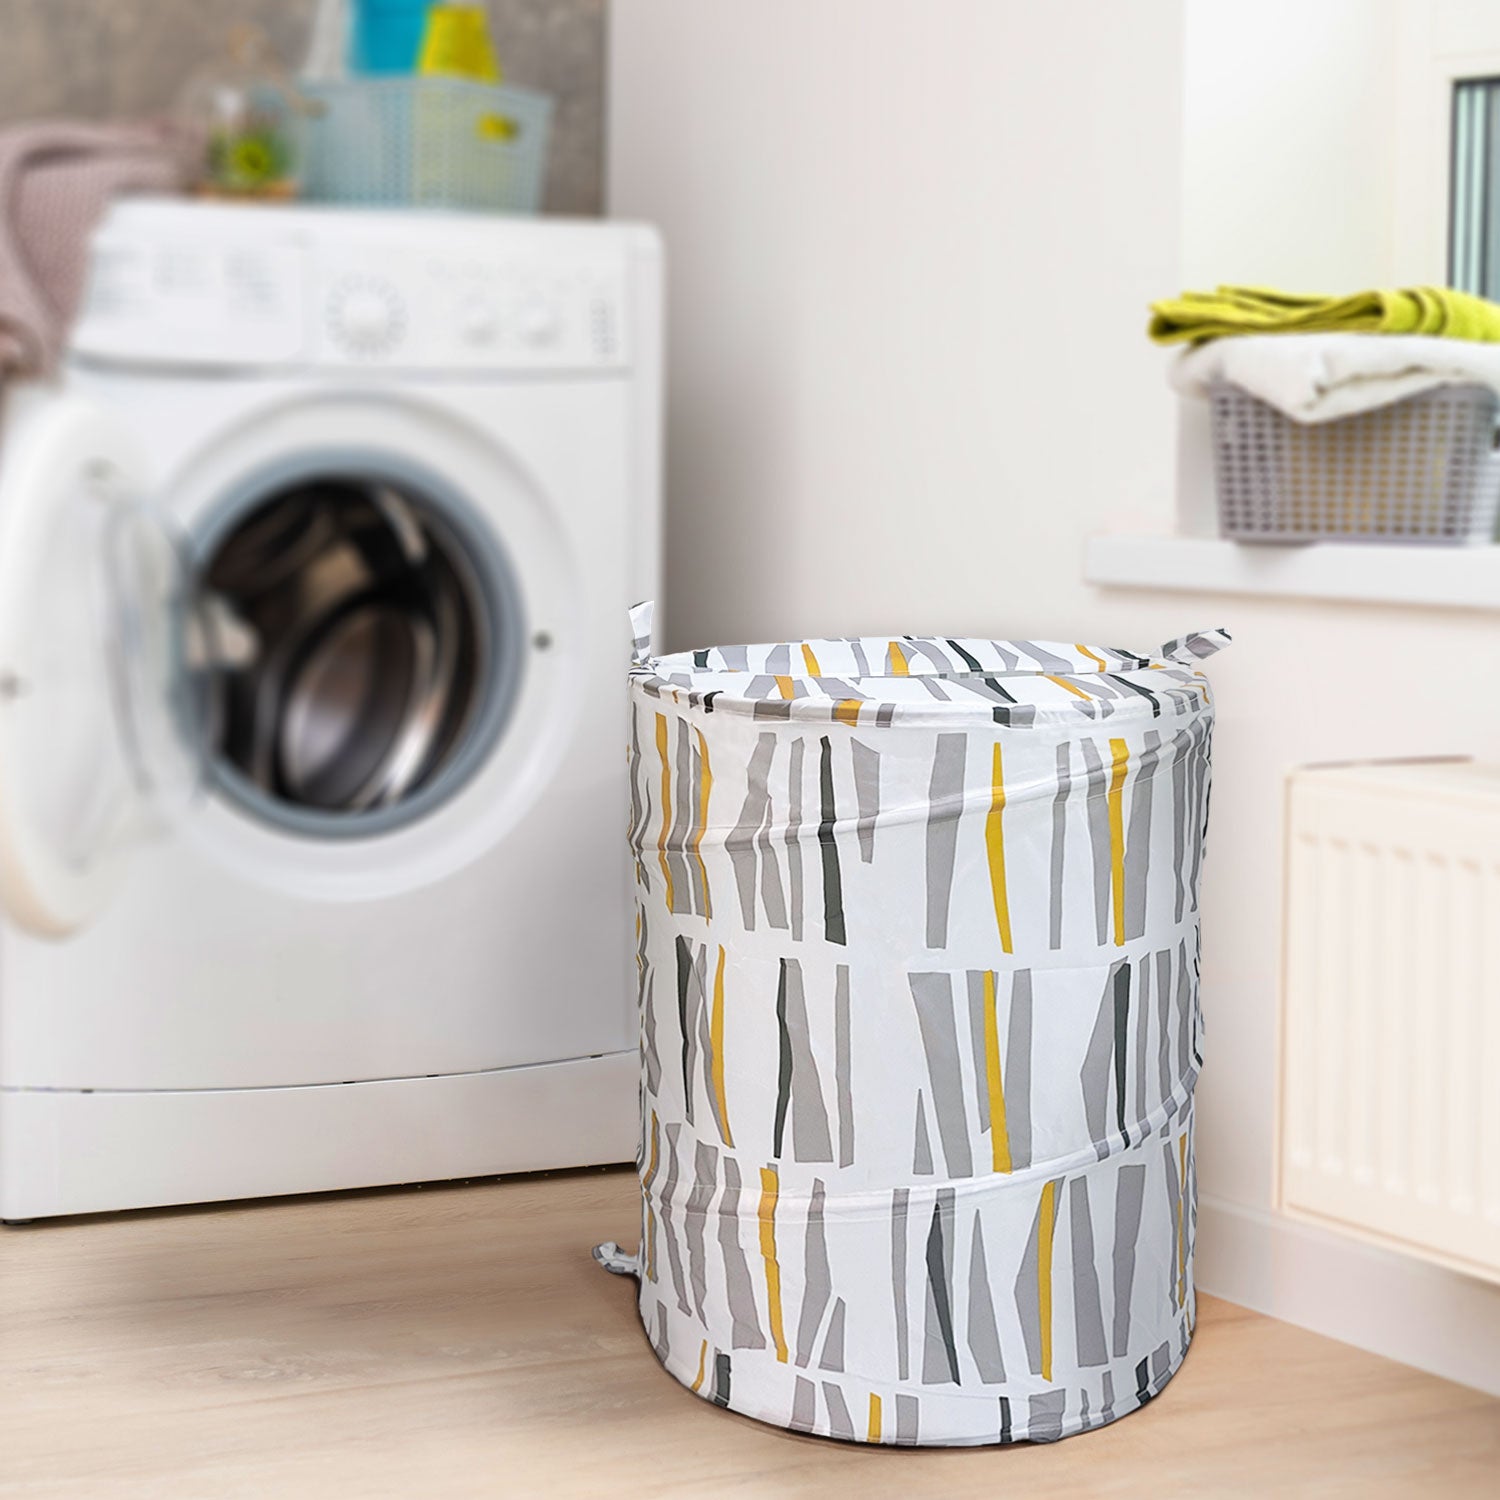 Deluxe Mesh Pop Up Square Laundry Hamper | Smart Design® Laundry